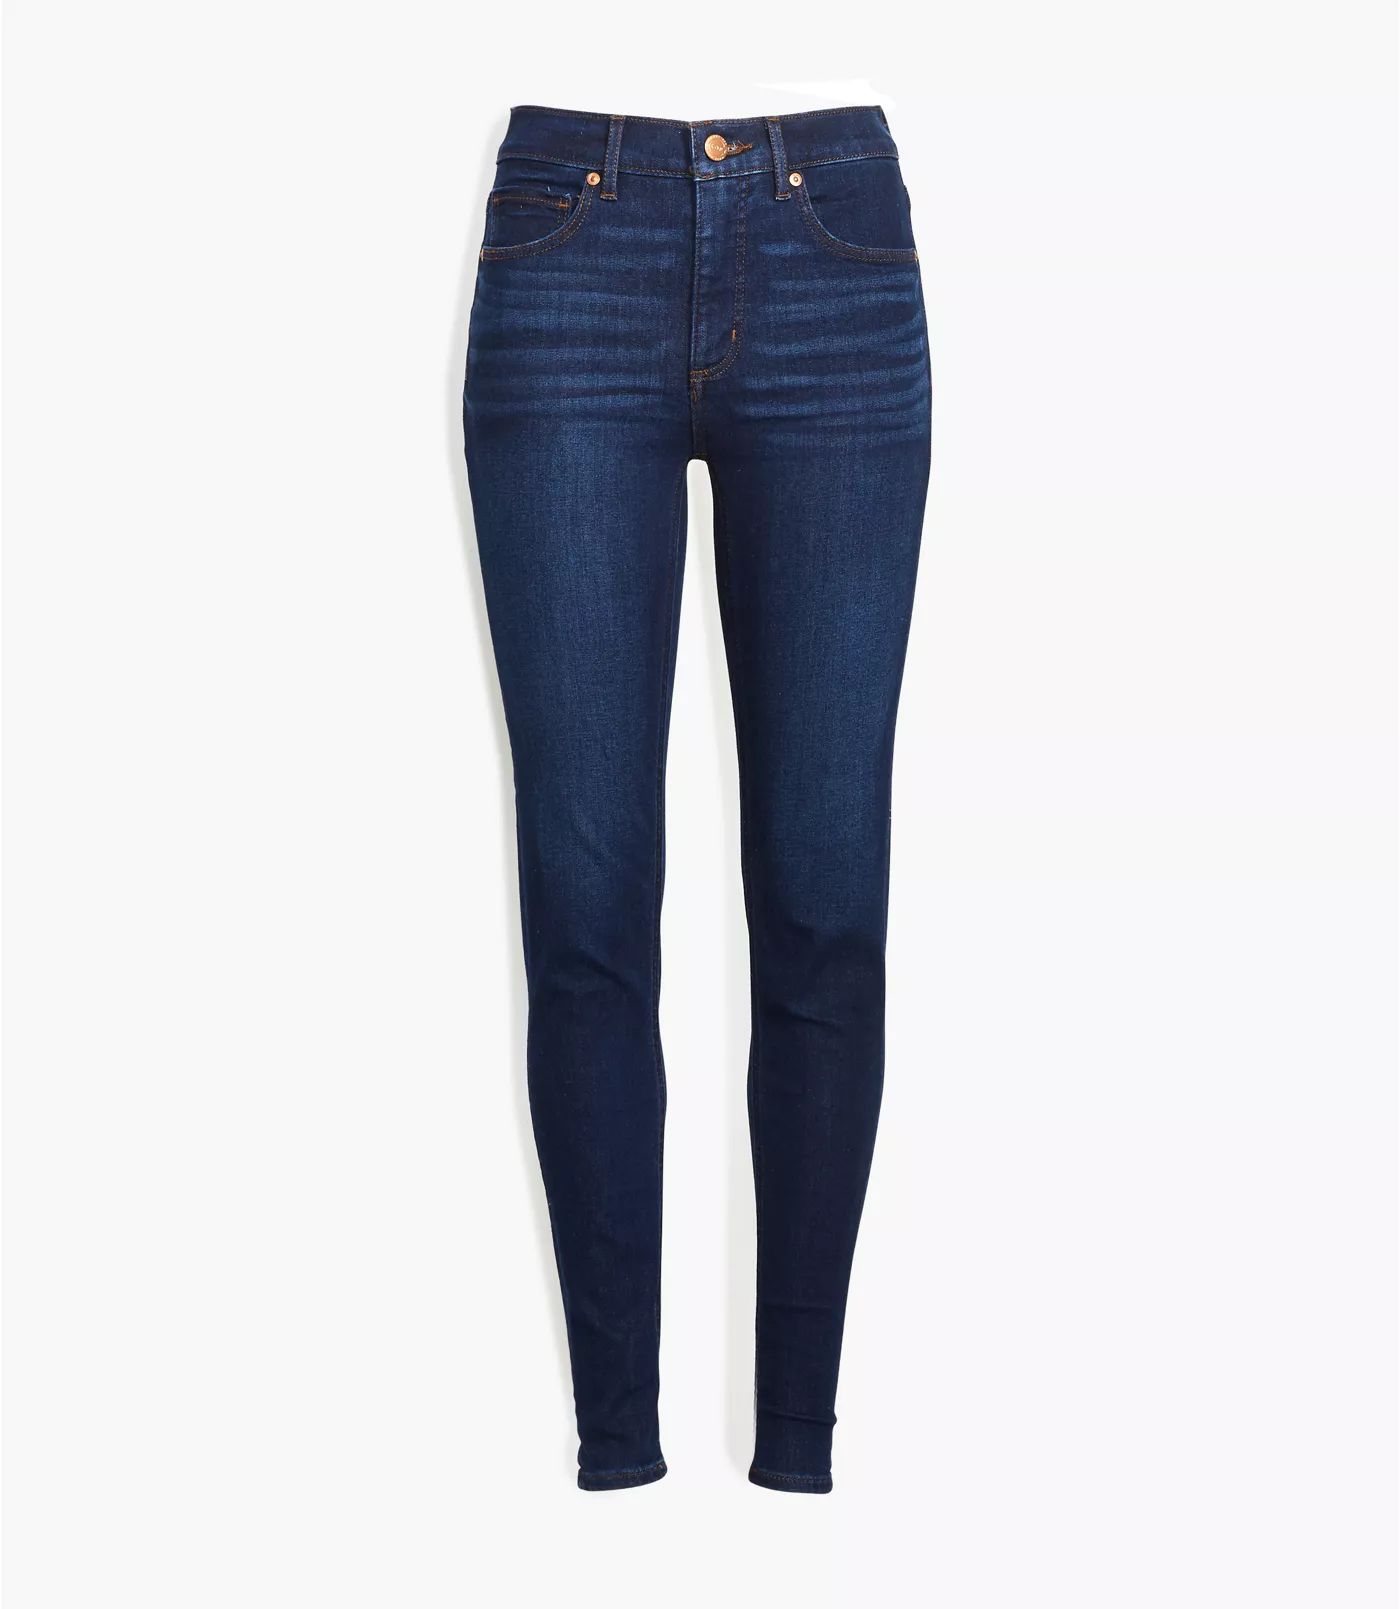 Curvy Skinny Jeans in Classic Dark Indigo Wash | LOFT | LOFT